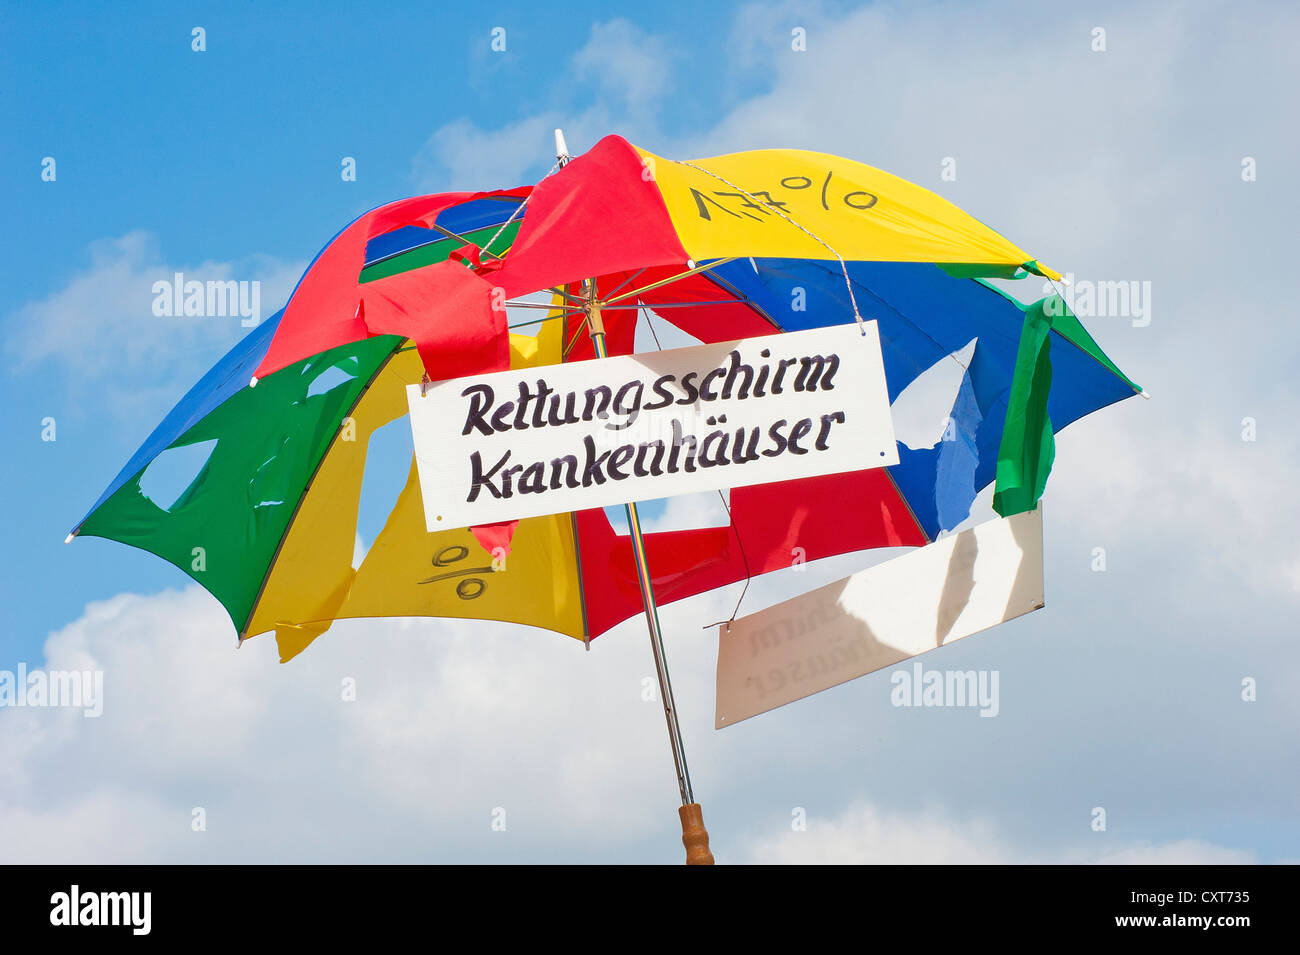 Broken umbrella with sign 'Rettungsschirm Krankenhaeuser', German for 'rescue umbrella for hospitals', 10, 000 workers from Stock Photo